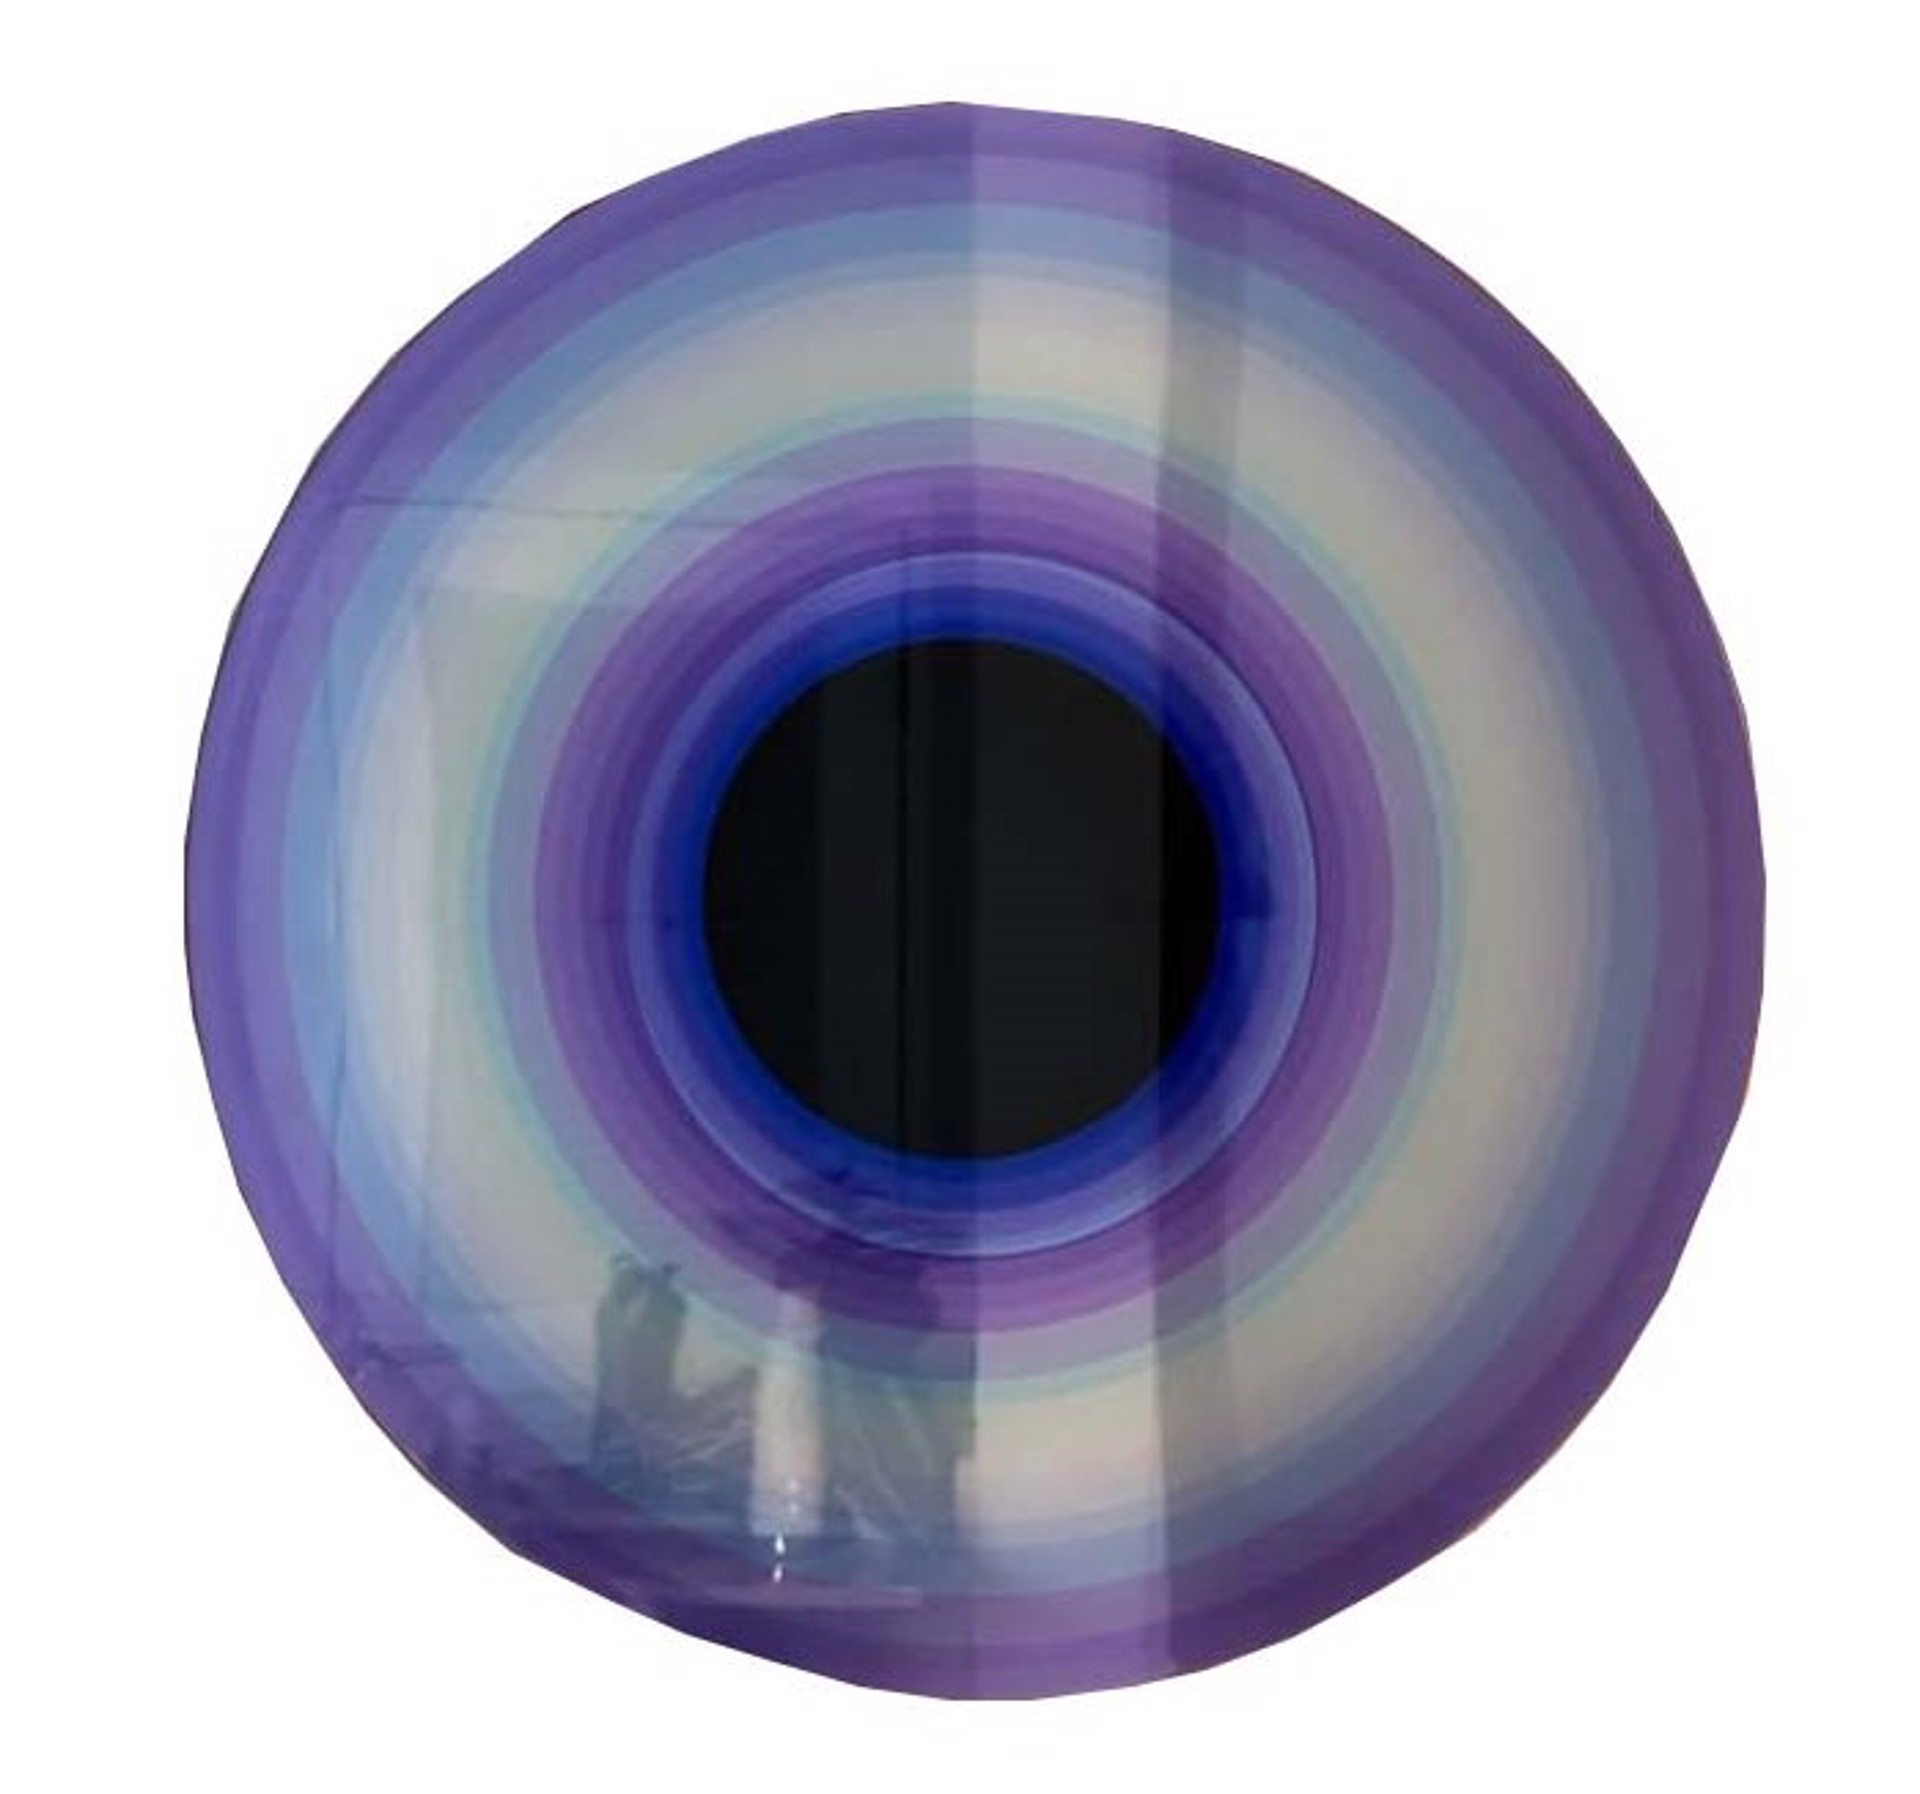 "Purple Disc of Life" by Elena Bulatova